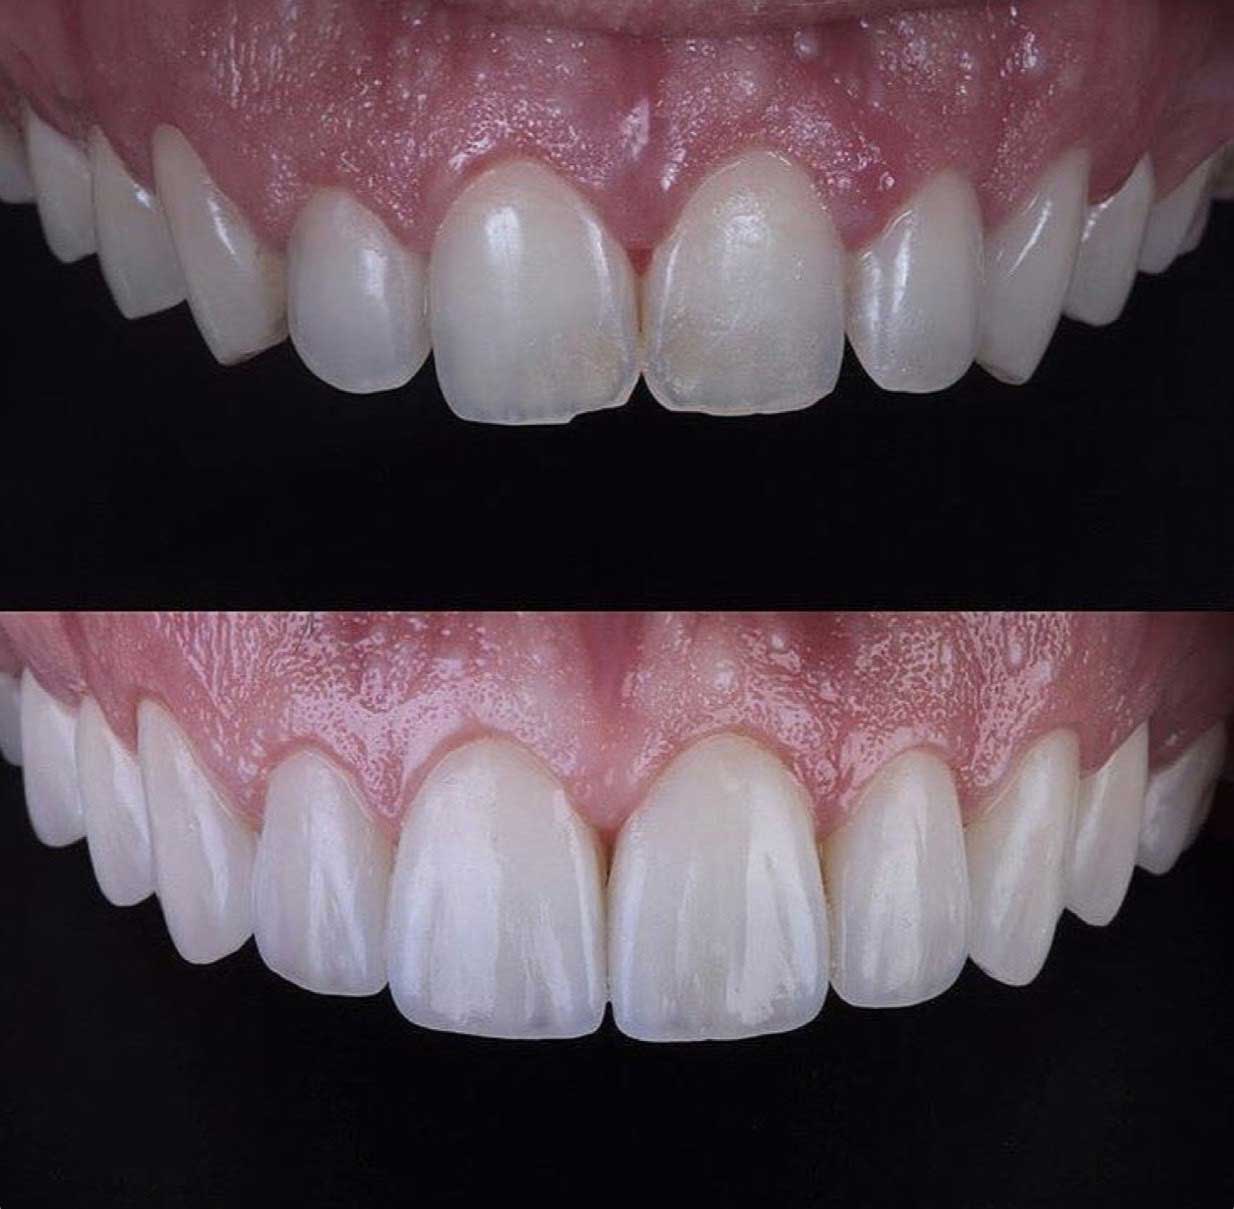 Porcelain Veneers Vs Dental Bonding: Choosing the Perfect Smile Enhancement